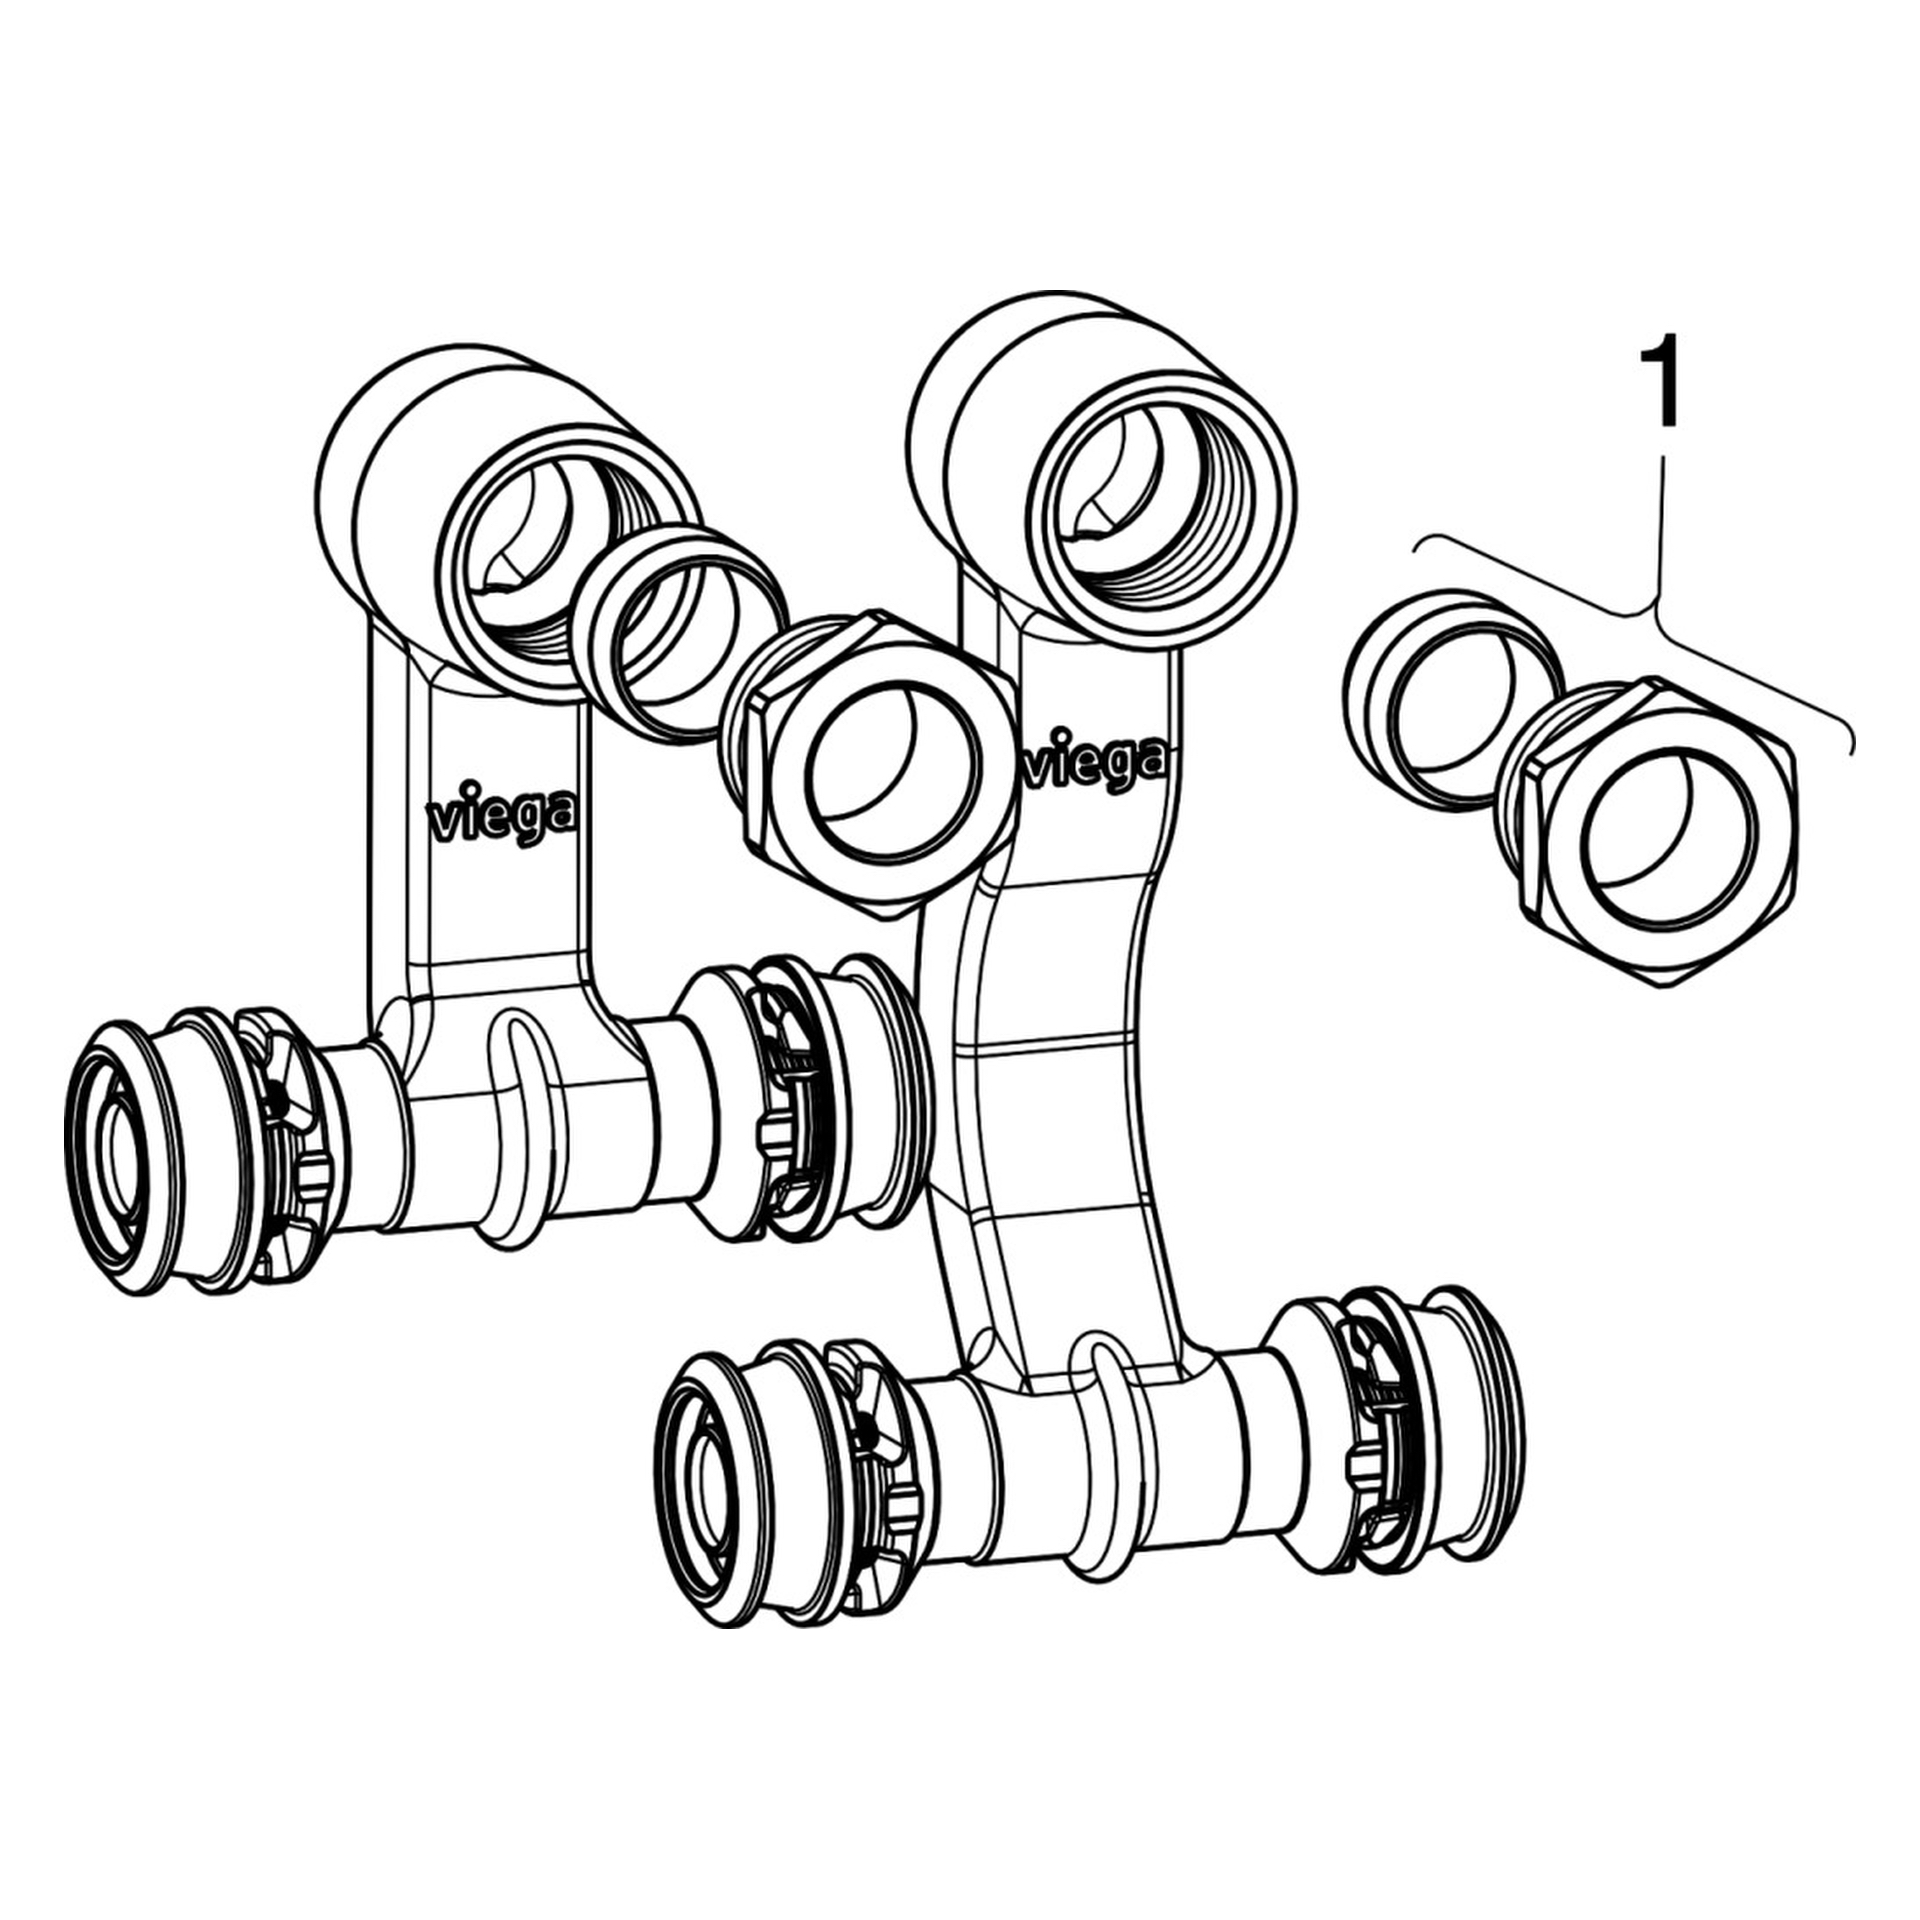 Viega „Raxofix“ Sockelleisten- Heizkörperanschlussstück 20 mm × 1/2″